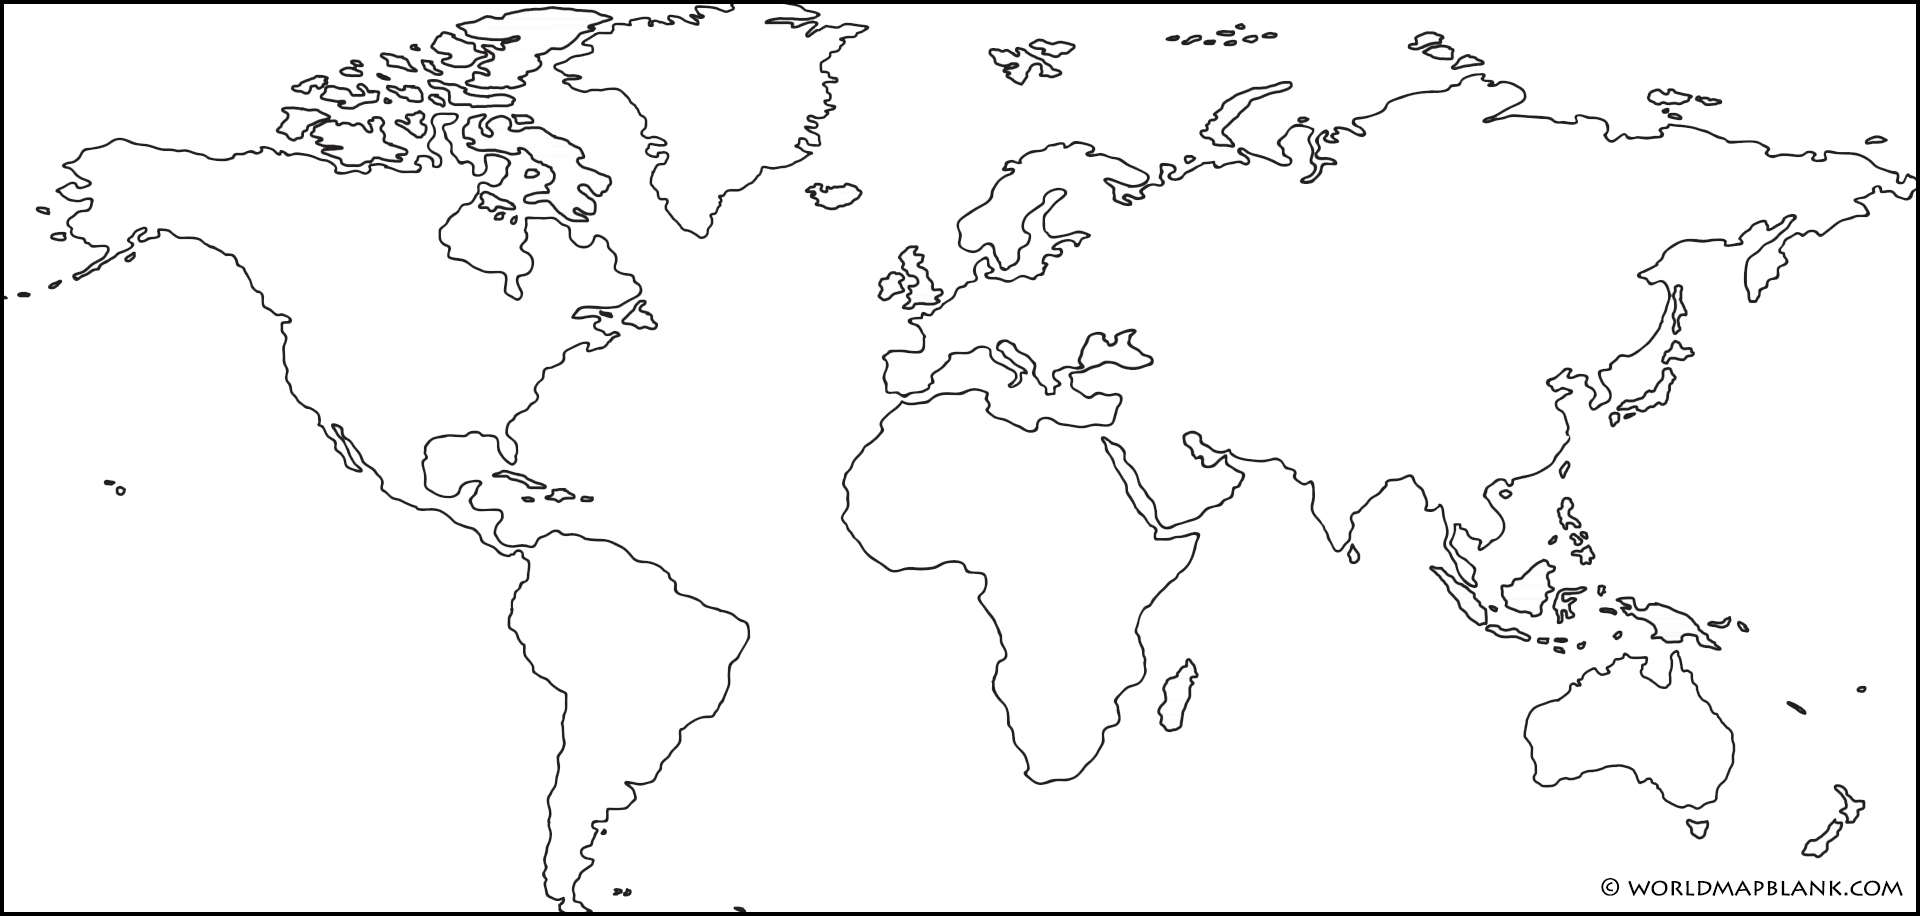 Umrisskarte Der Welt